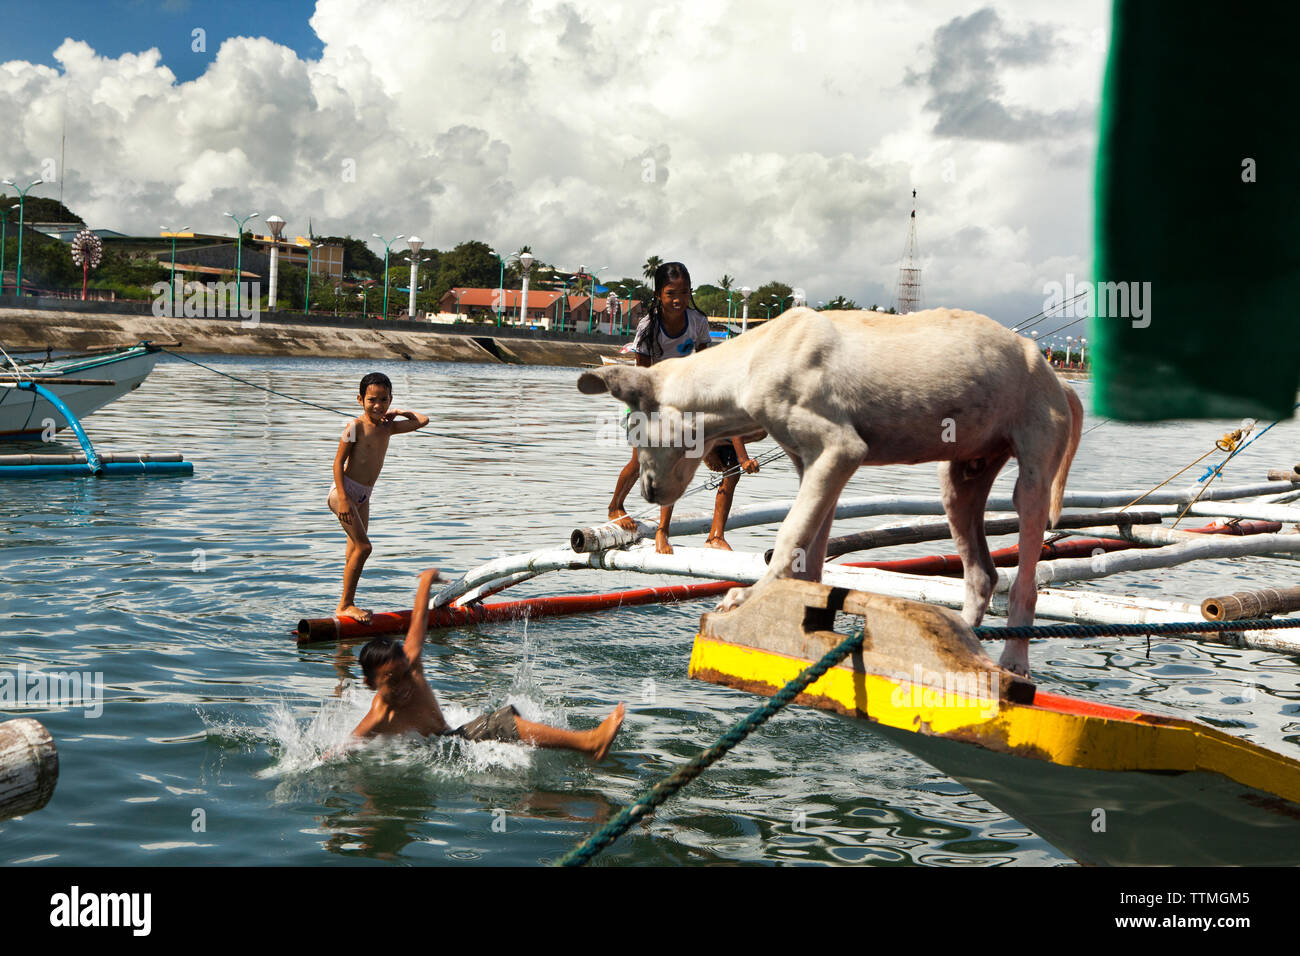 https://c8.alamy.com/comp/TTMGM5/philippines-palawan-puerto-princesa-kids-play-on-fishing-boats-in-the-city-port-area-TTMGM5.jpg